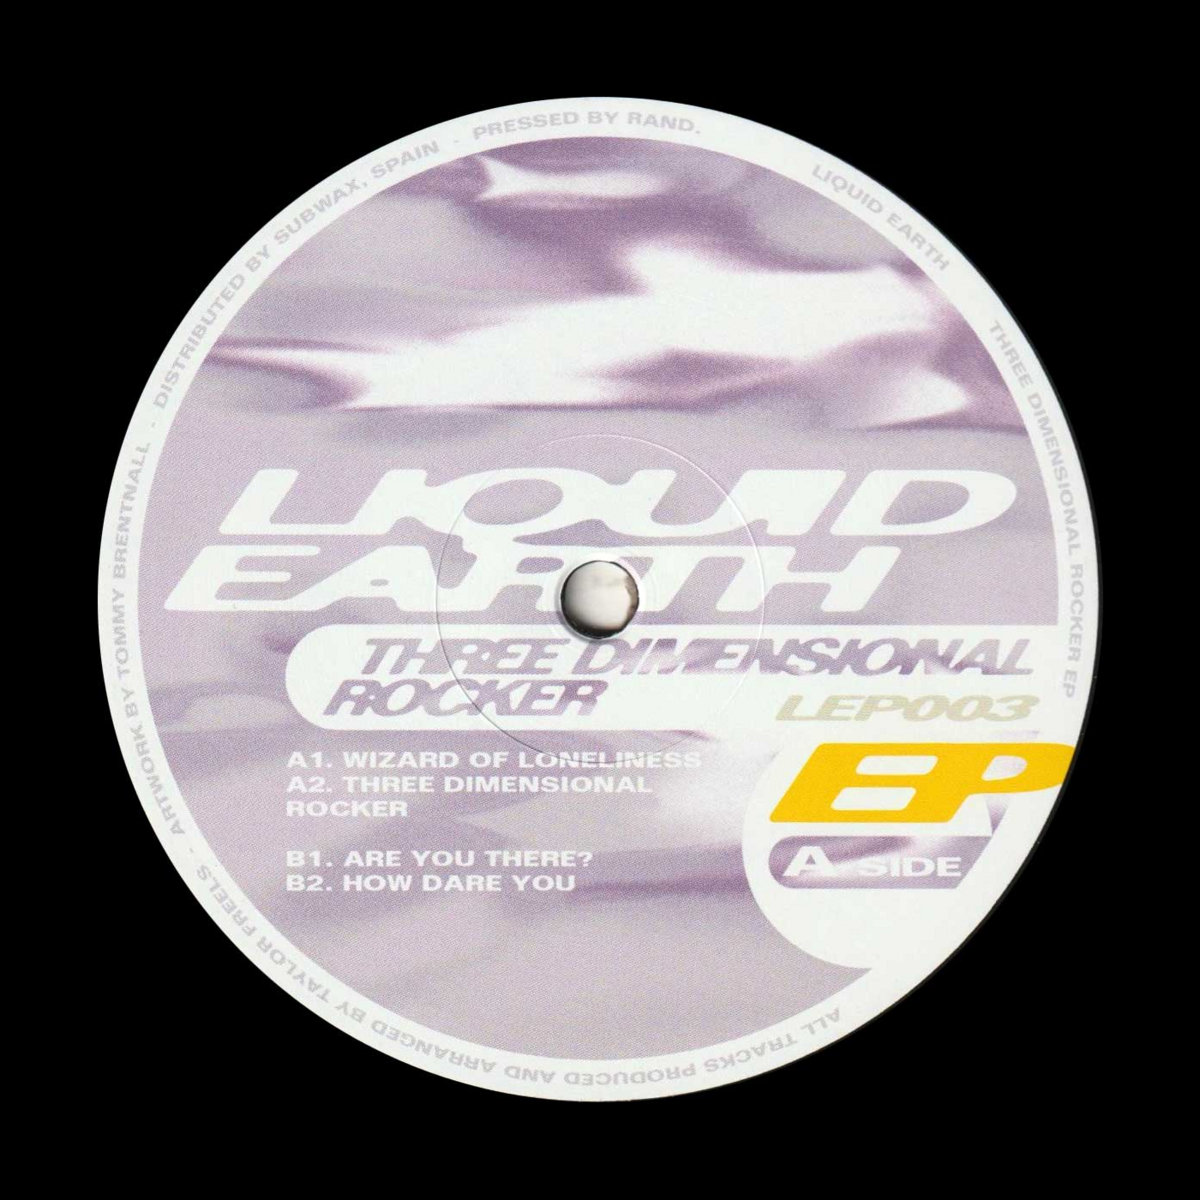 image cover: Liquid Earth - Three Dimensional Rocker EP on Liquid Earth Physical